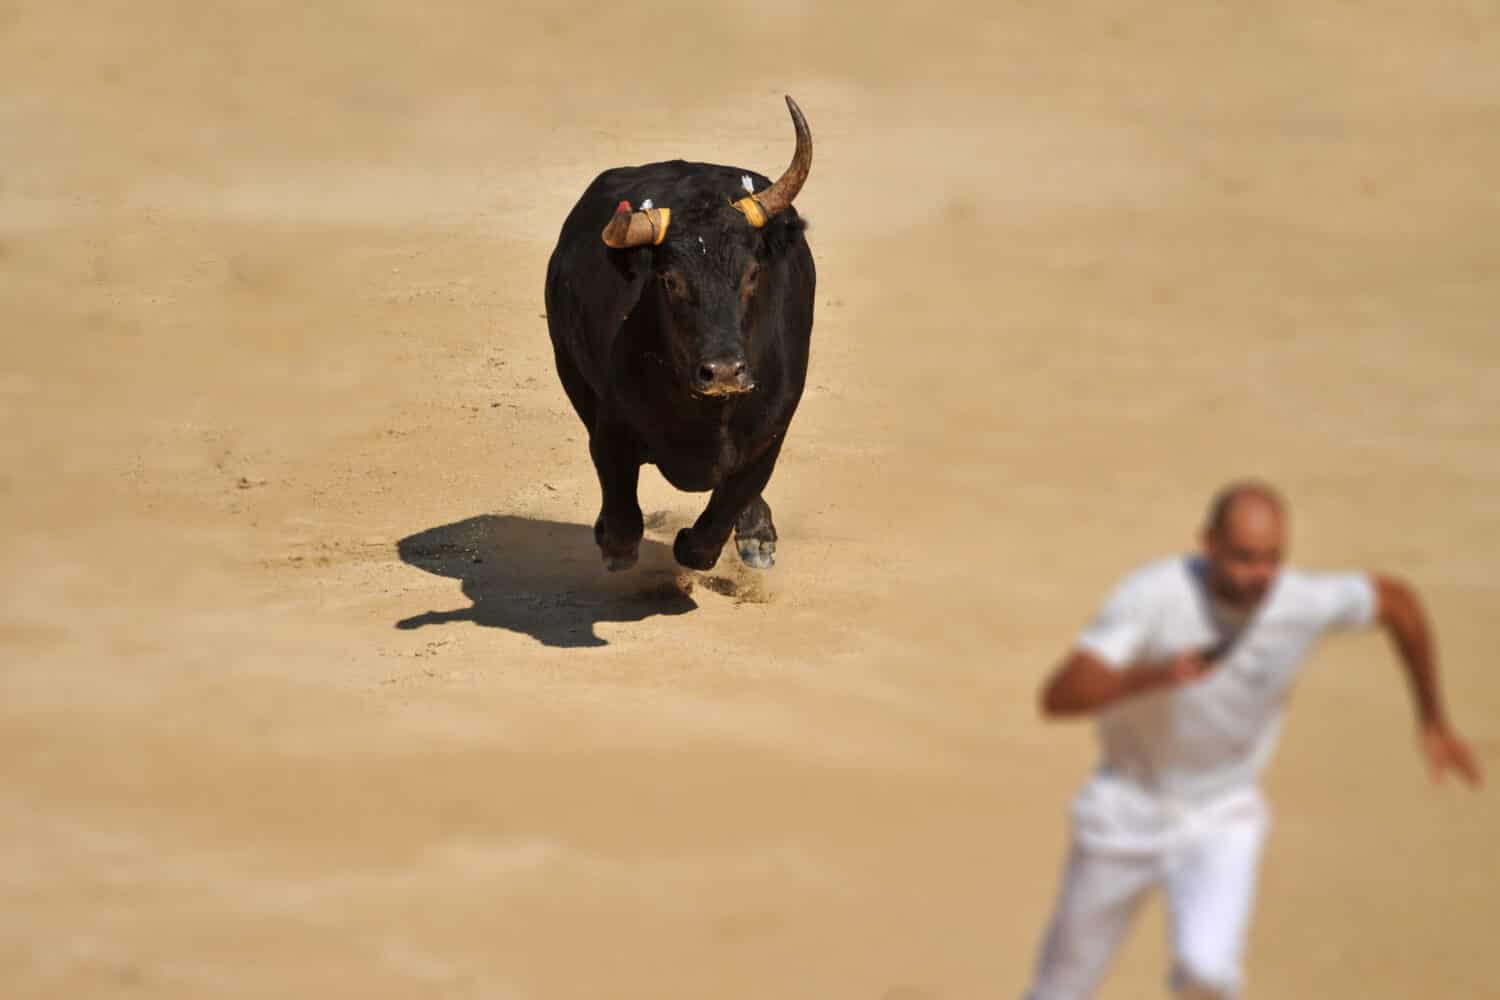 Furious bull in the bullfight arena running near a man